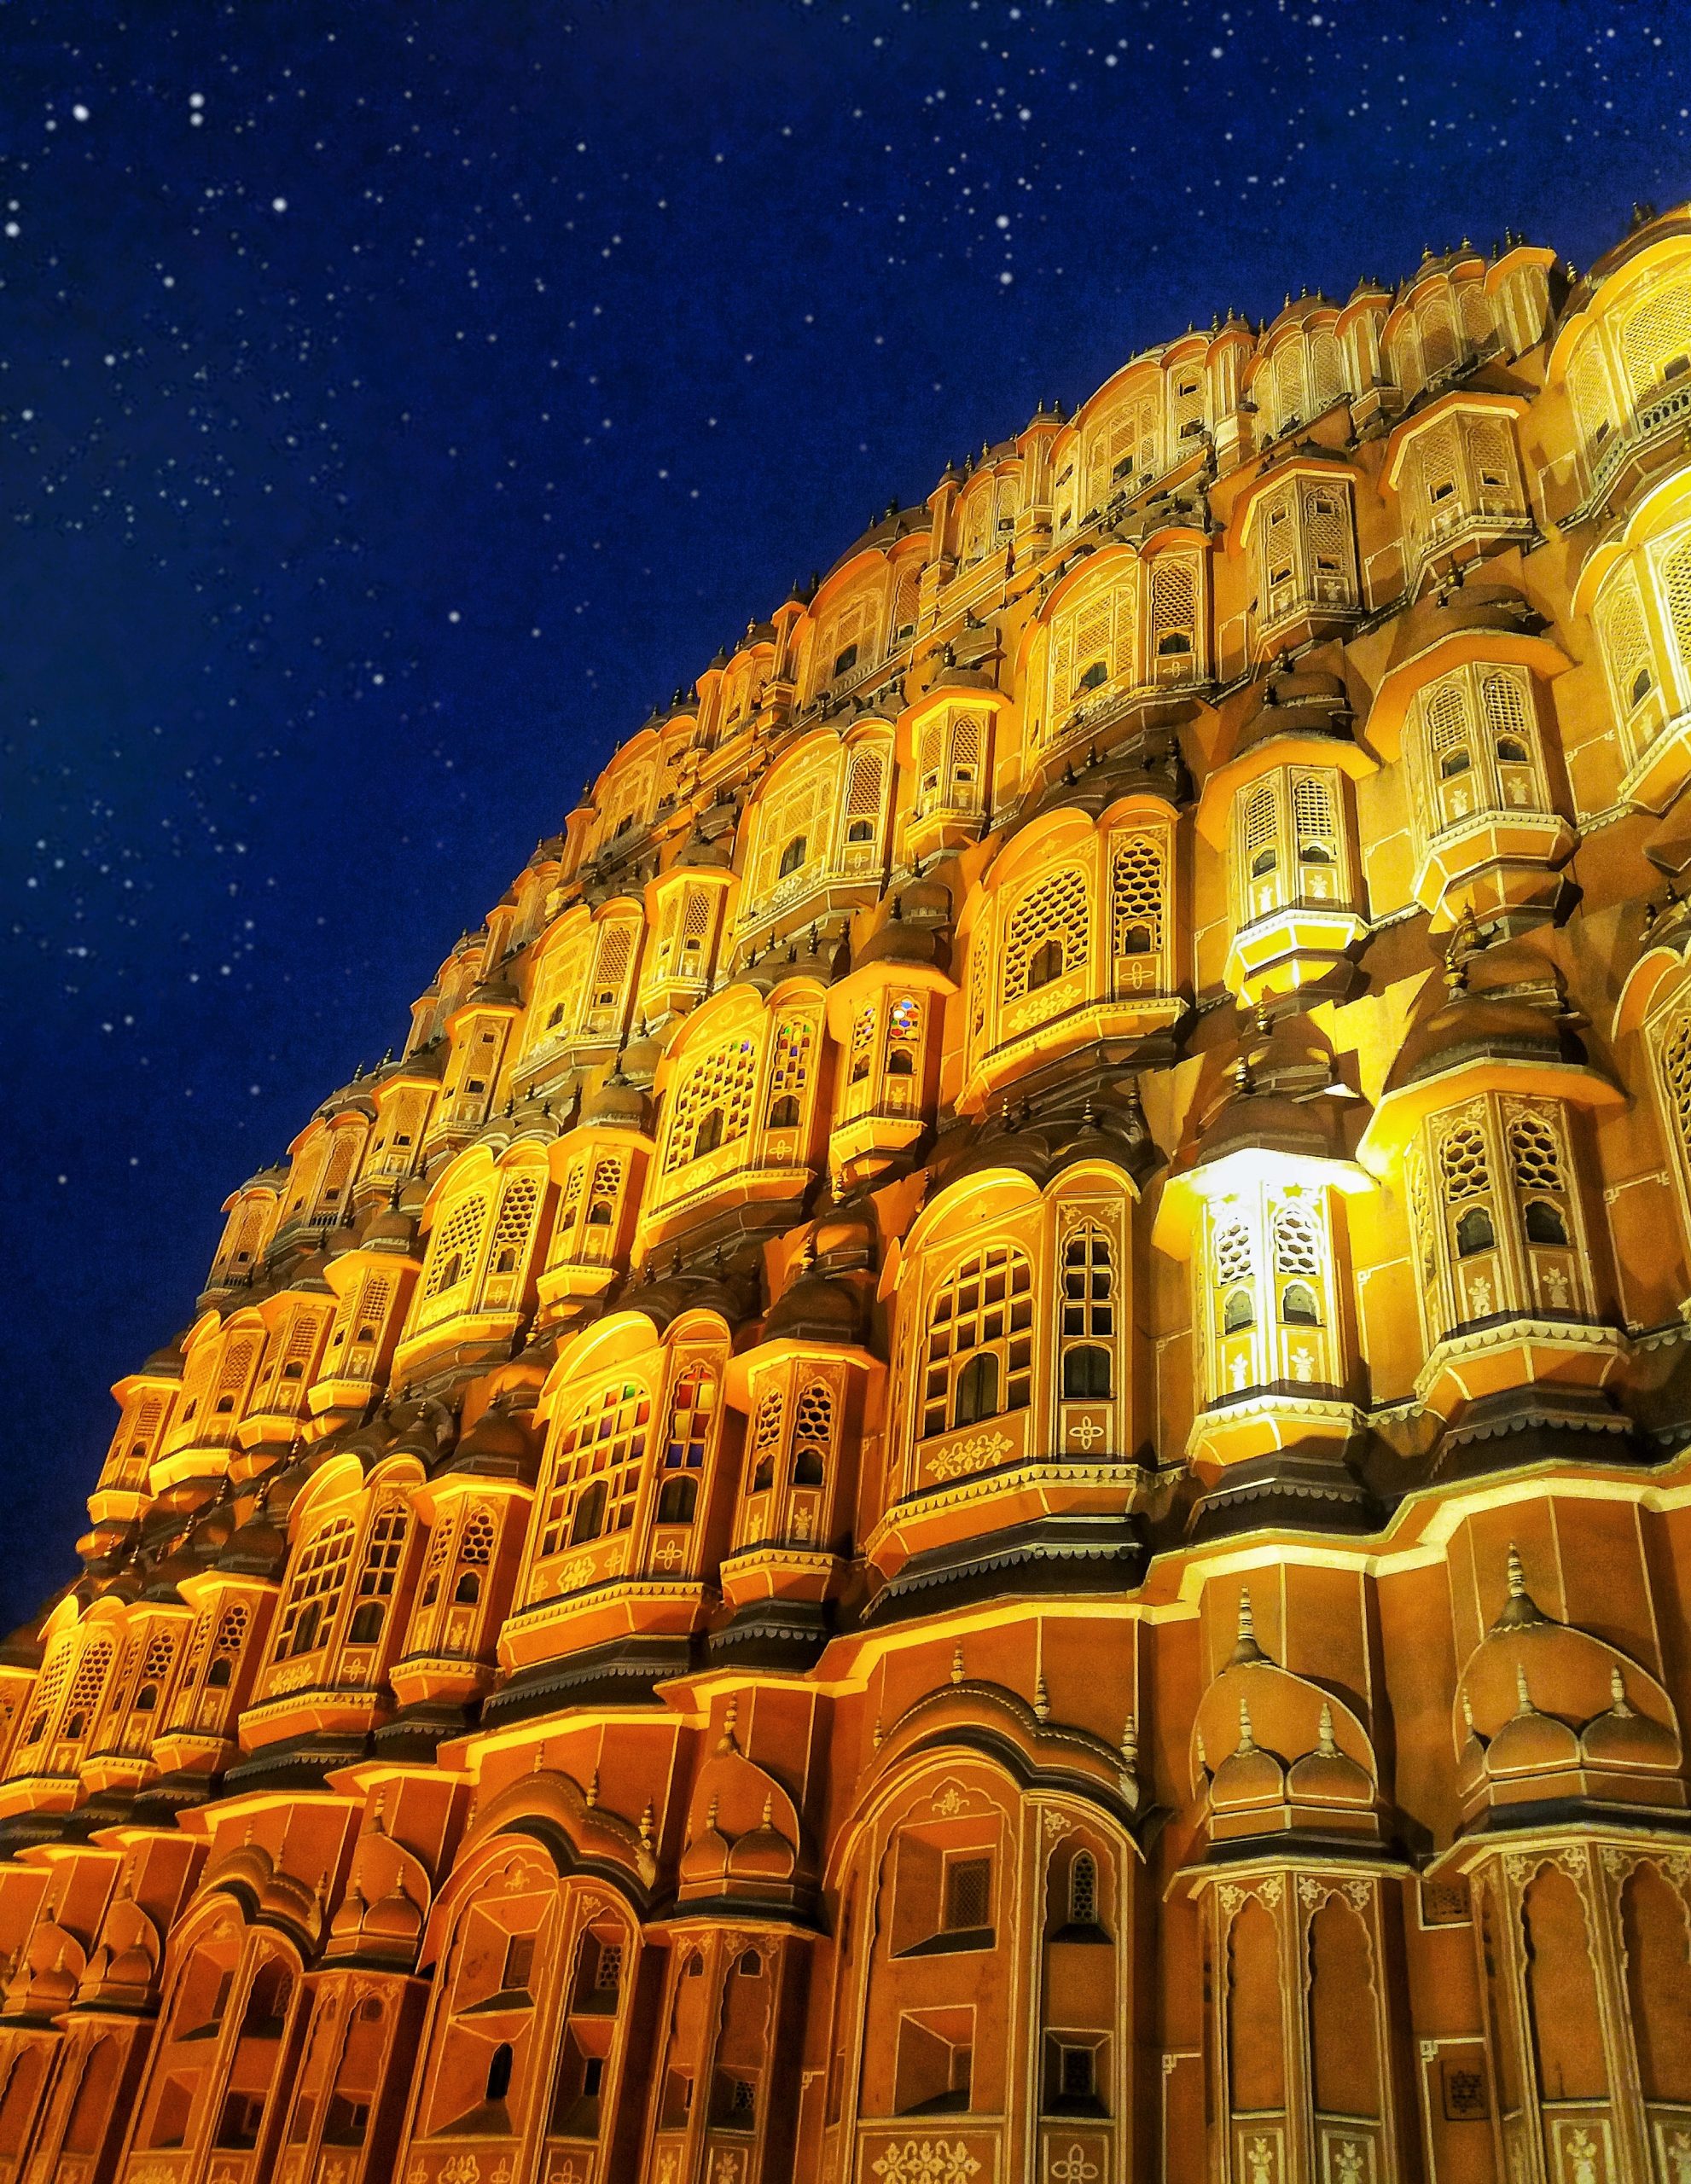 hawa Mahal in jaipur